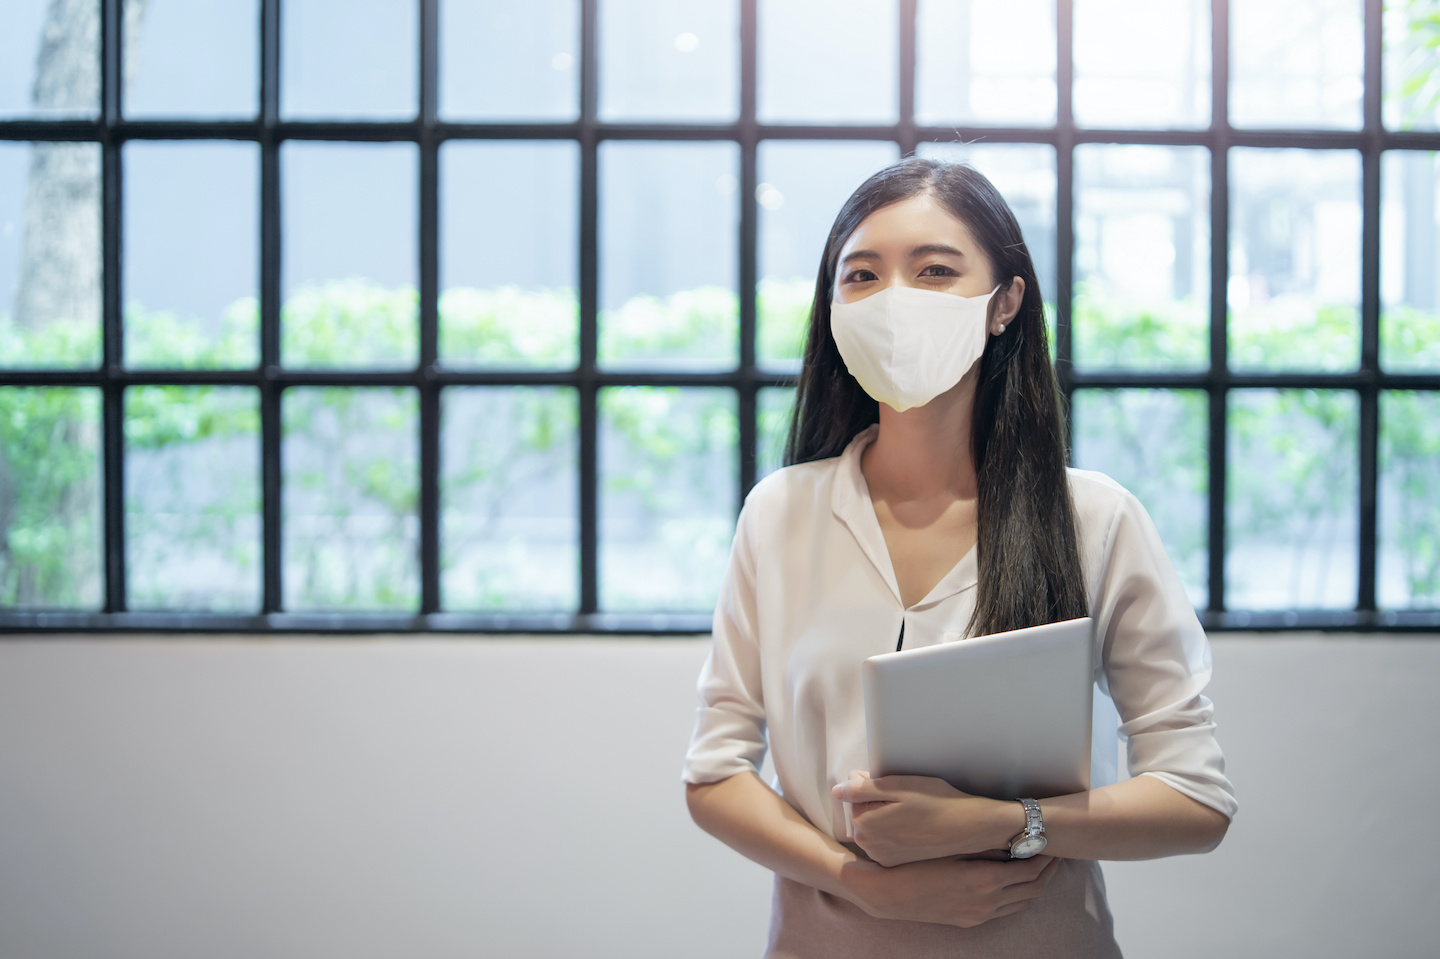 Asian businesswoman office assistance employee wearing face mask